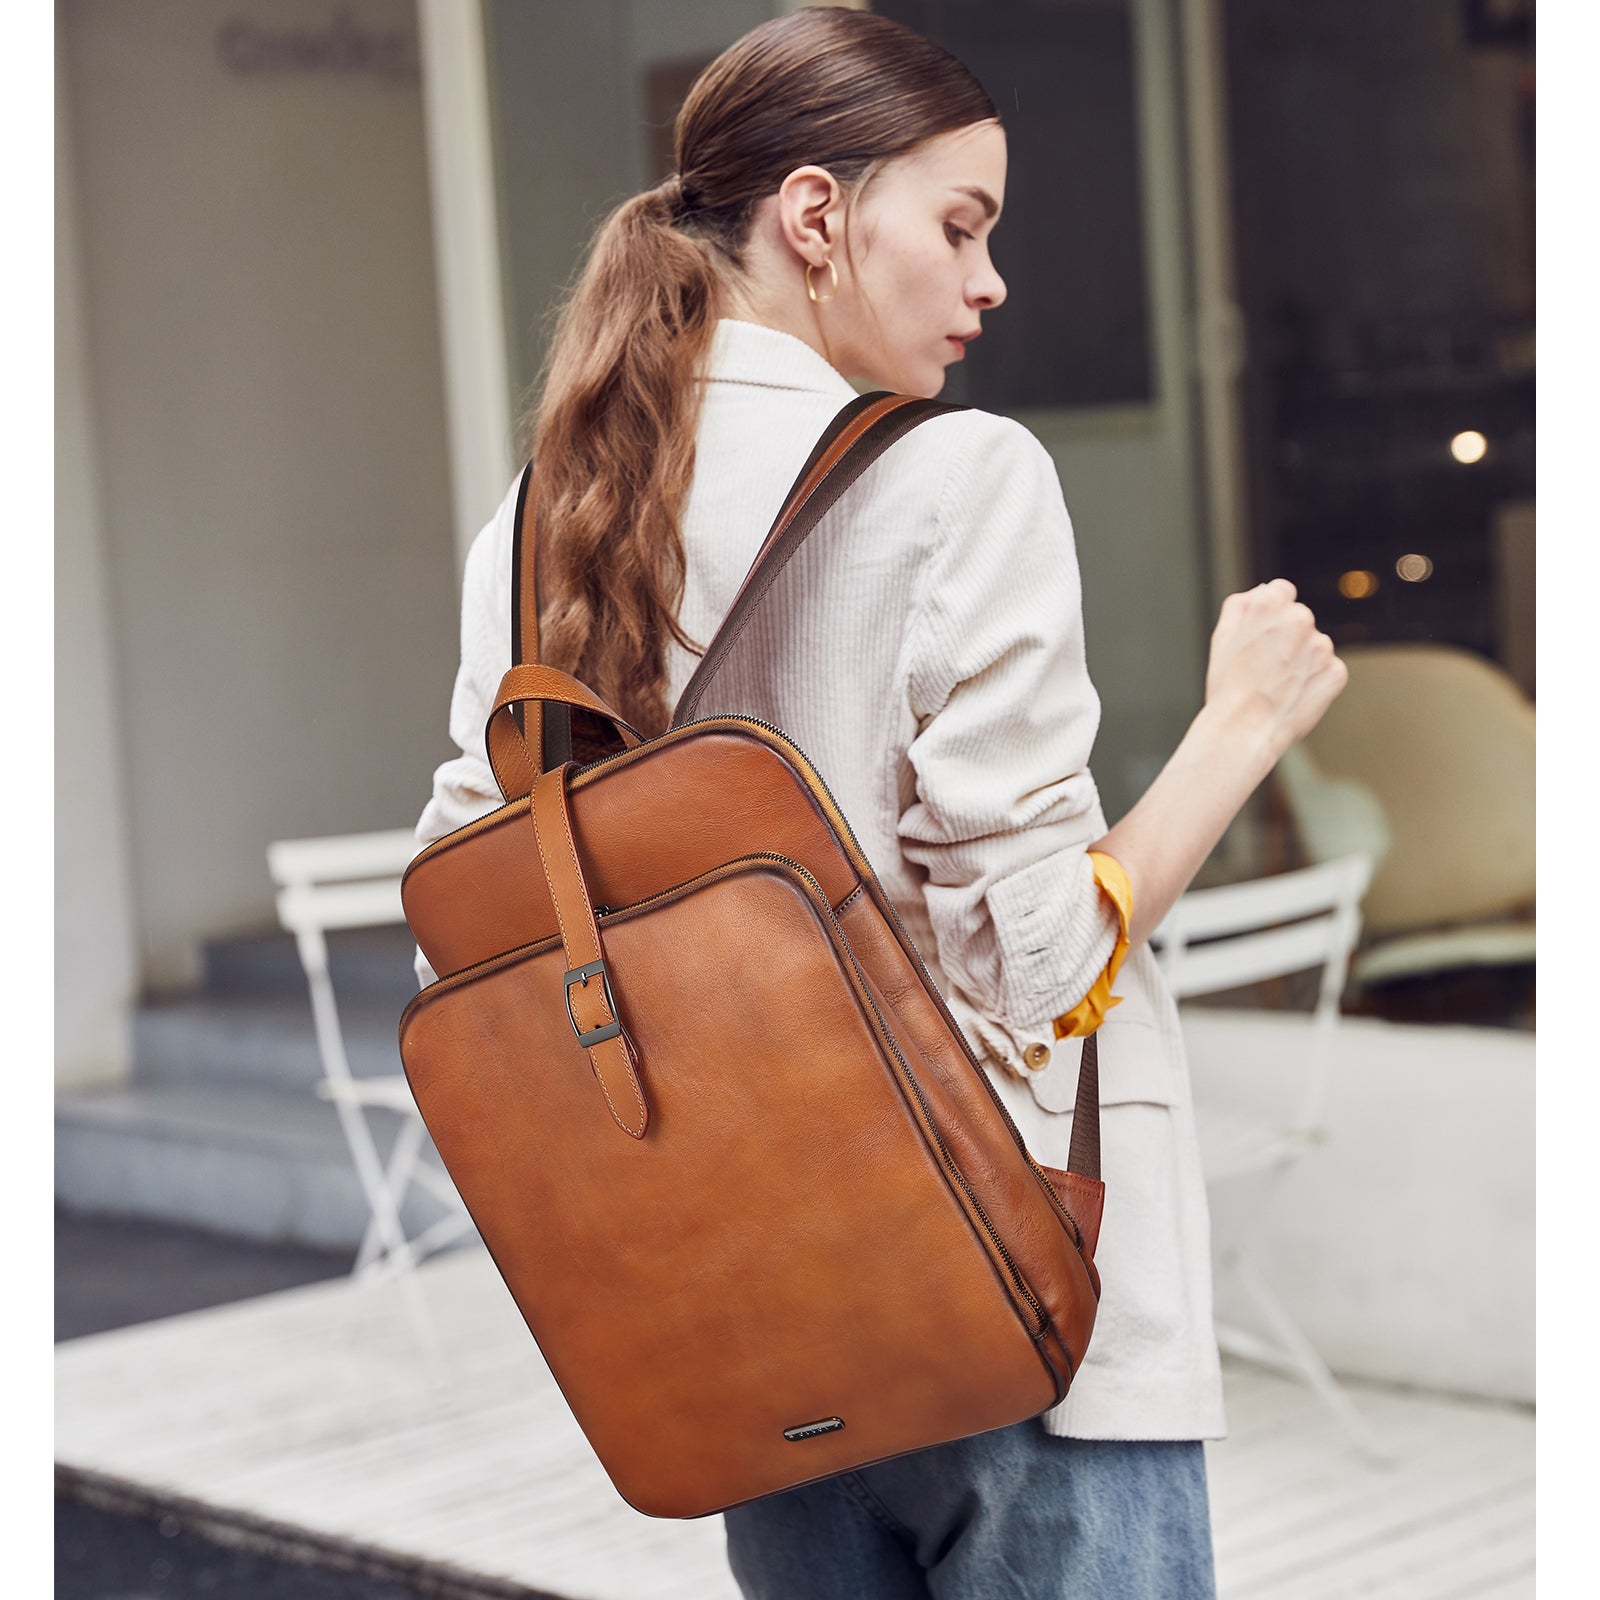 CLUCI Womens Backpack Purse Vegetable Tanned Full Grain Leather 15.6 inch Laptop Travel Business Vintage Large Shoulder Bag